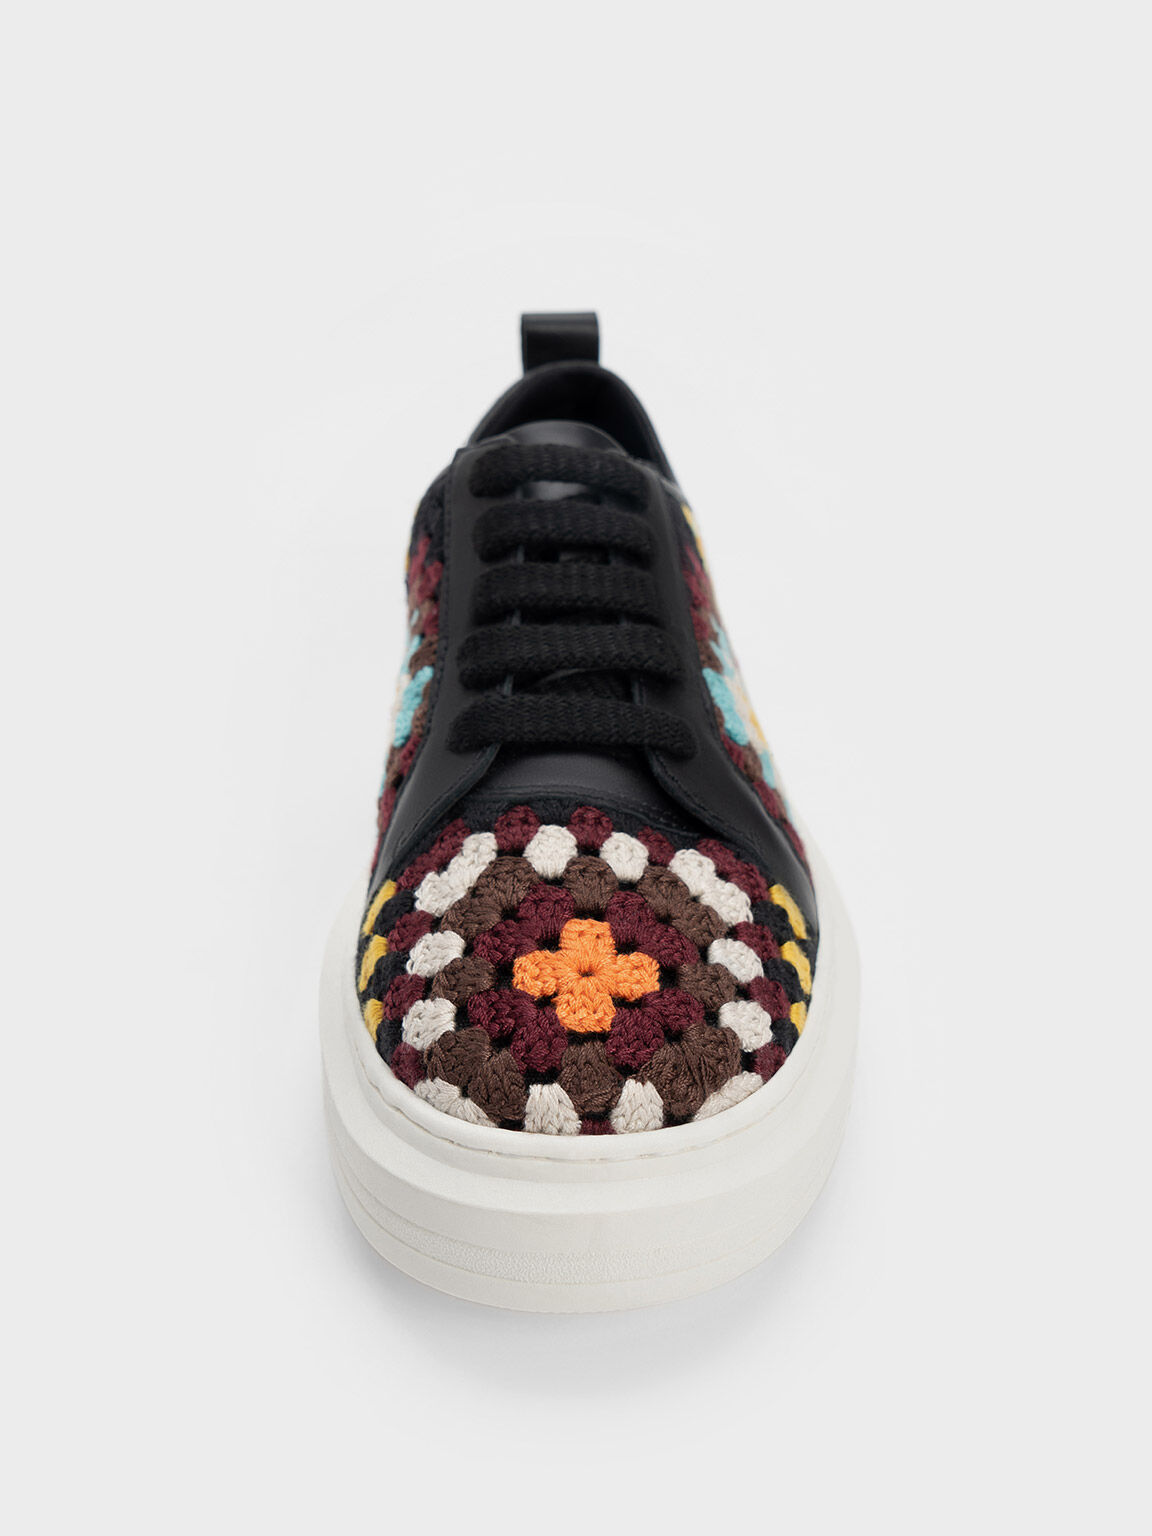 Sepatu Sneakers Crochet & Leather Floral, Multi, hi-res